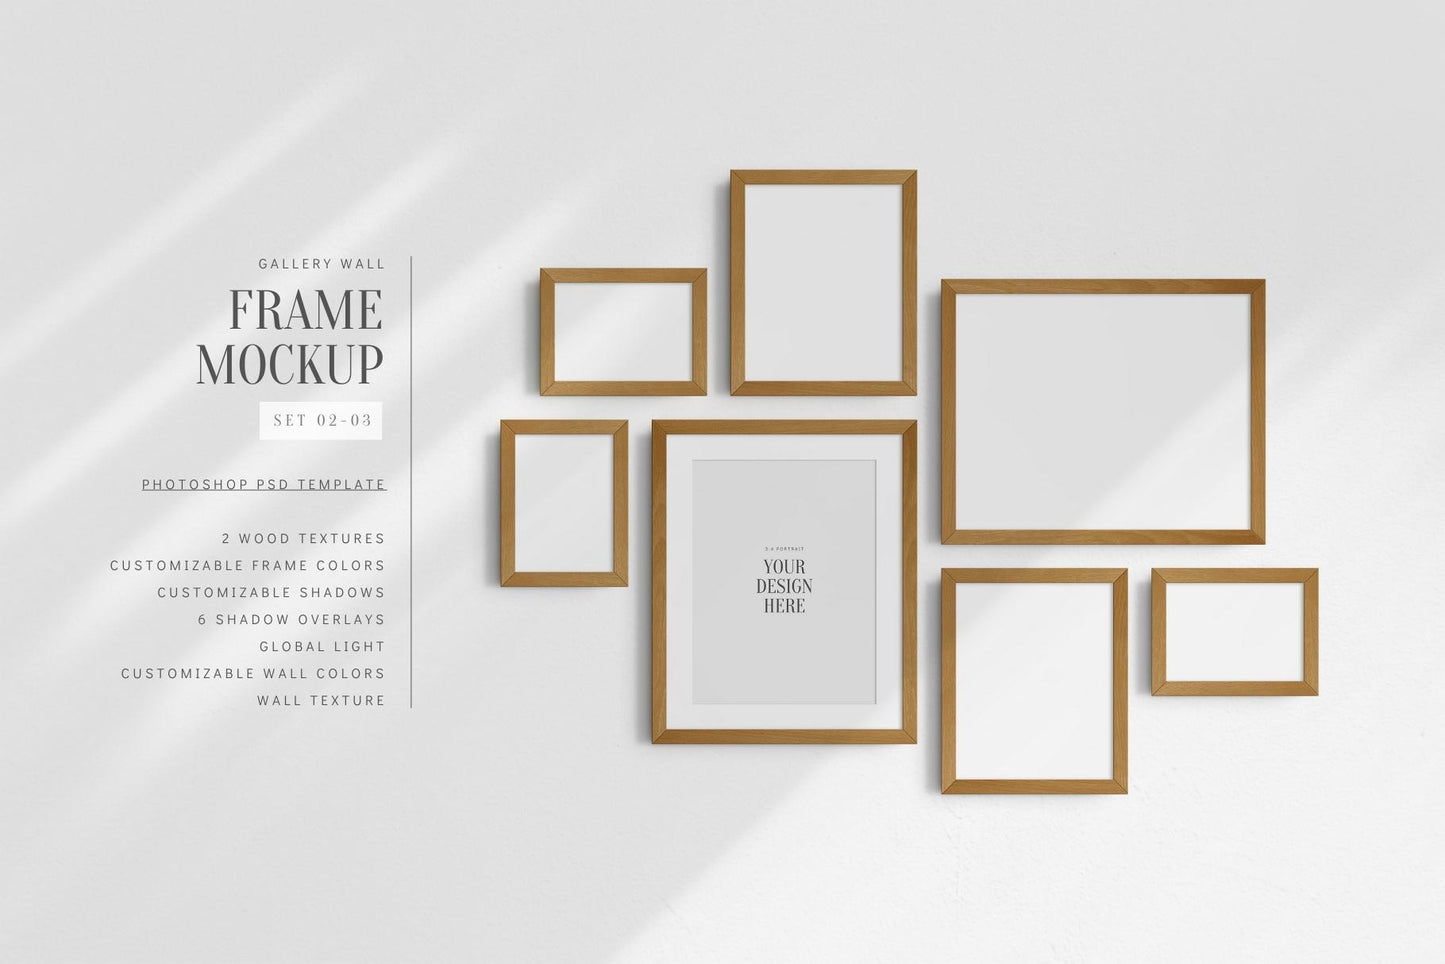 Gallery Wall Mockup | Set of 7 Frames | Frame Mockup | PSD | Editable, Customizable